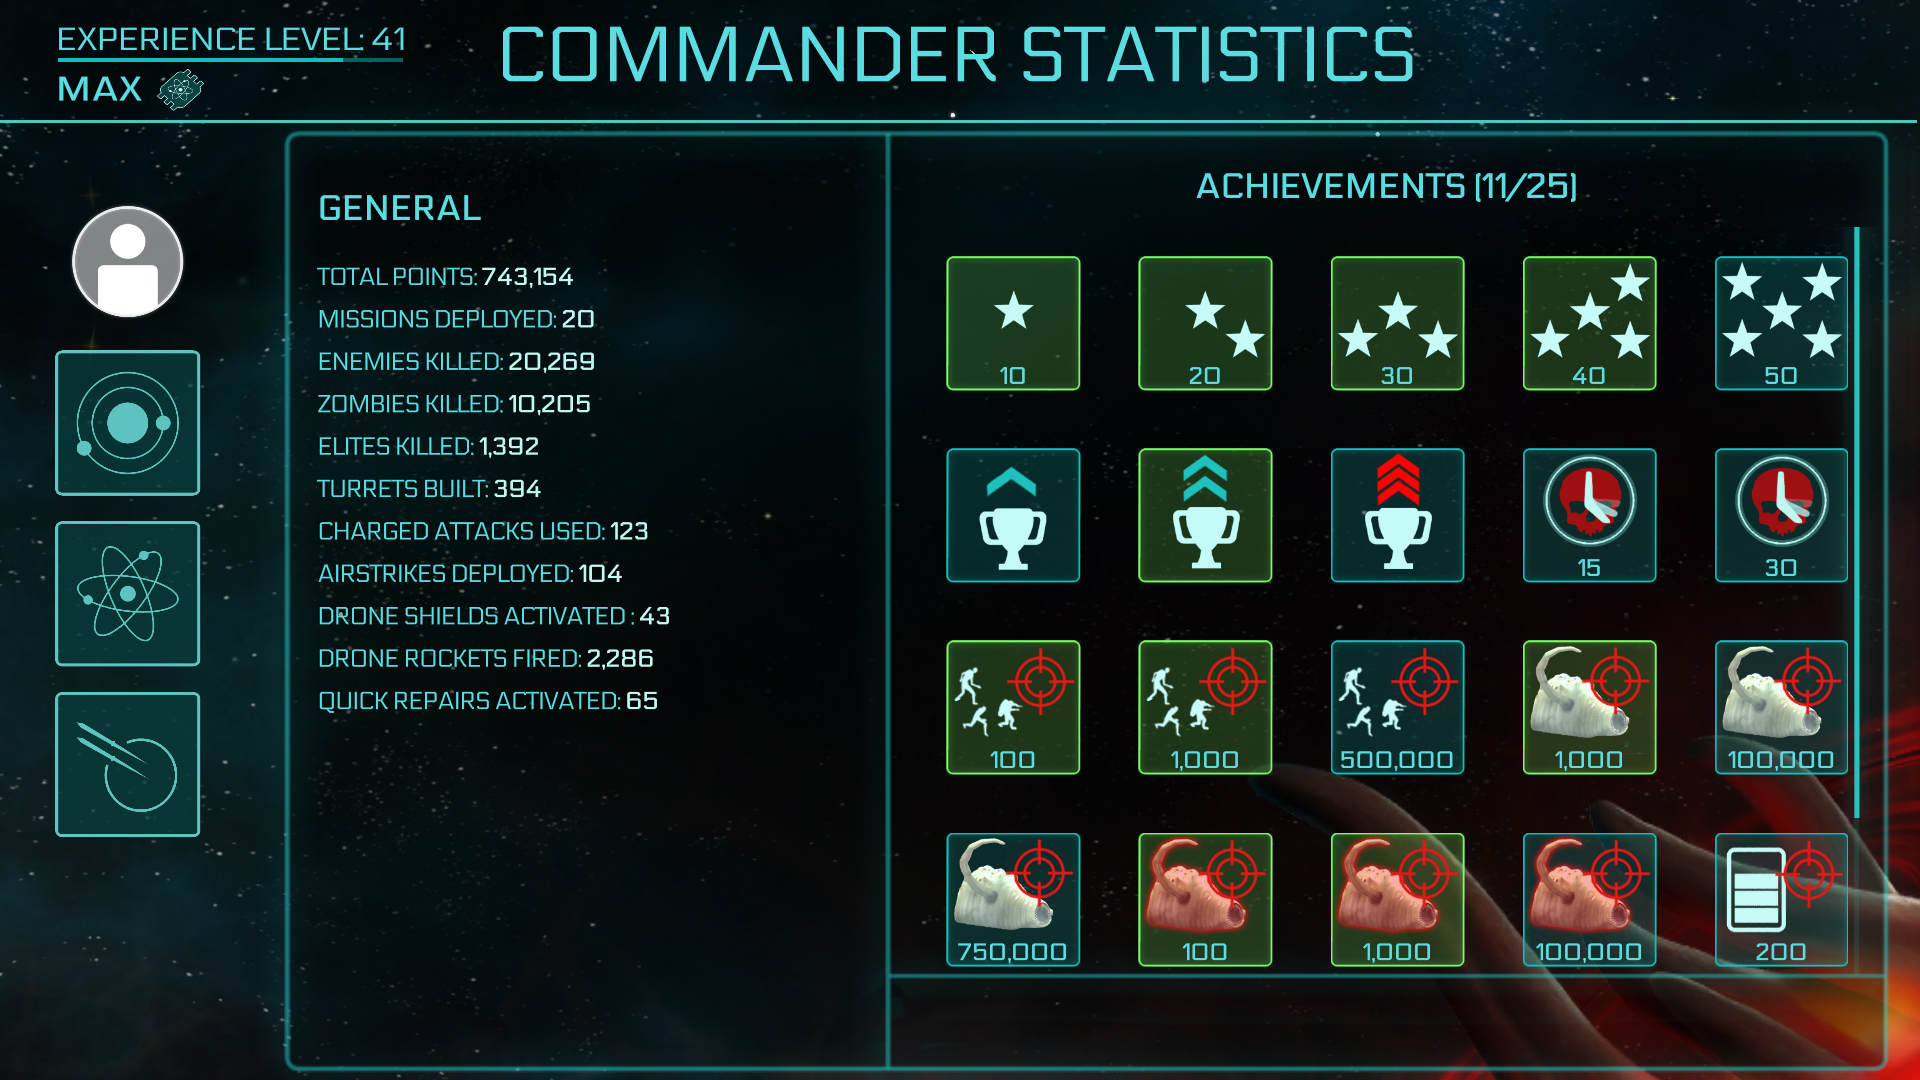 2112TD_Achievements_Commander_Statistics.jpg